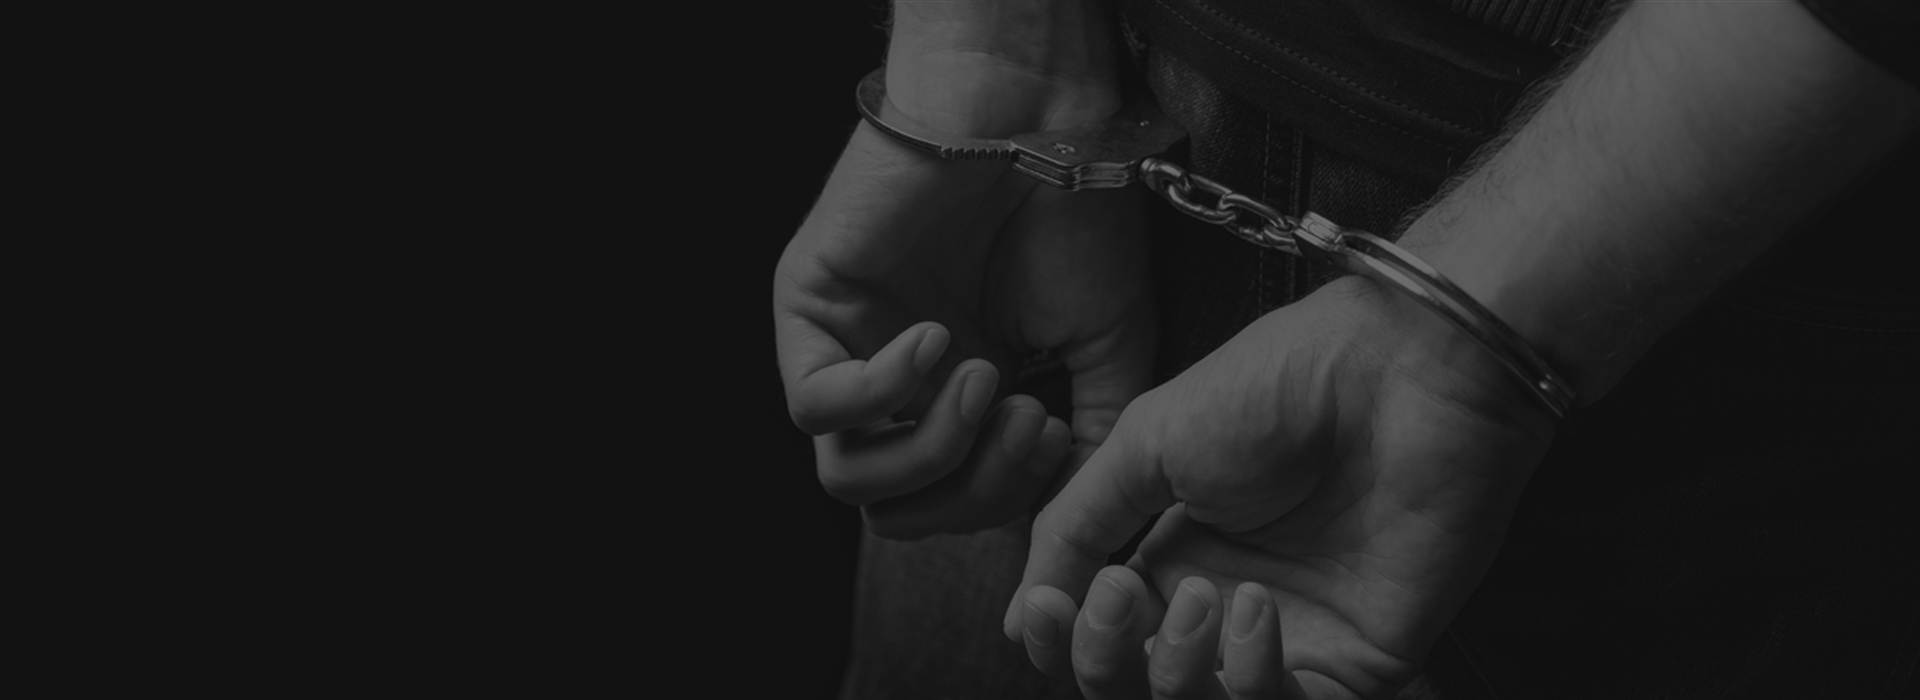 Husband and wife arrested for child porn, child rape â€“ Dysart Willis